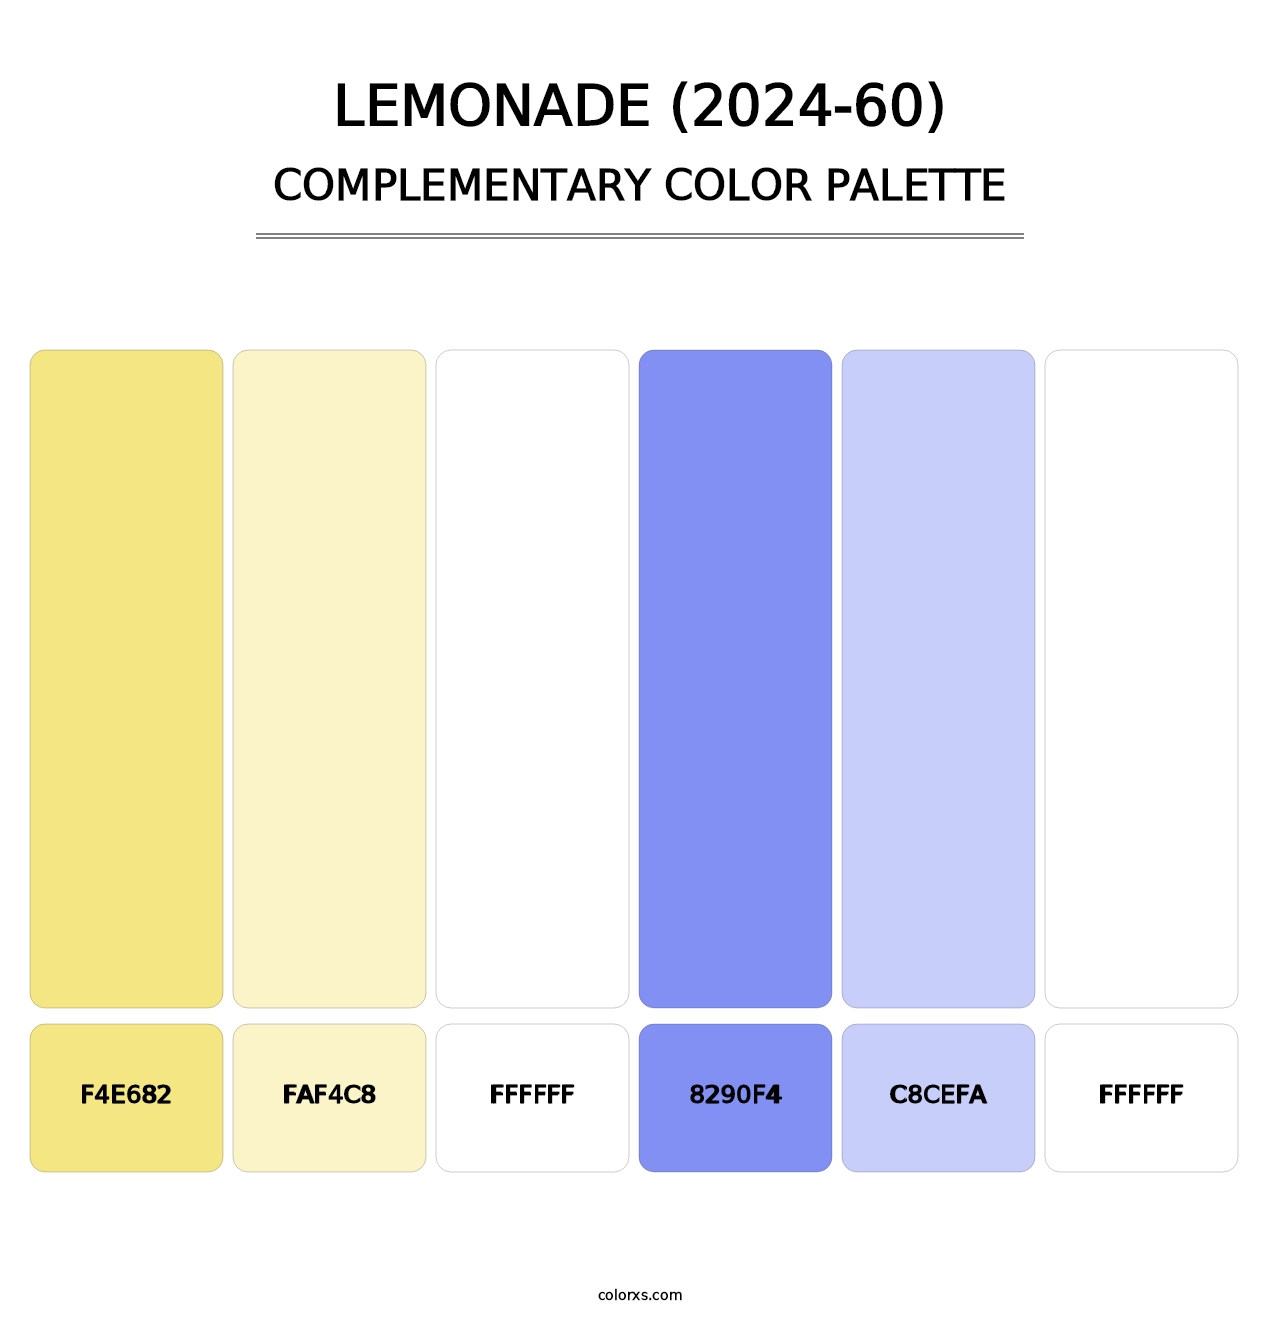 Lemonade (2024-60) - Complementary Color Palette